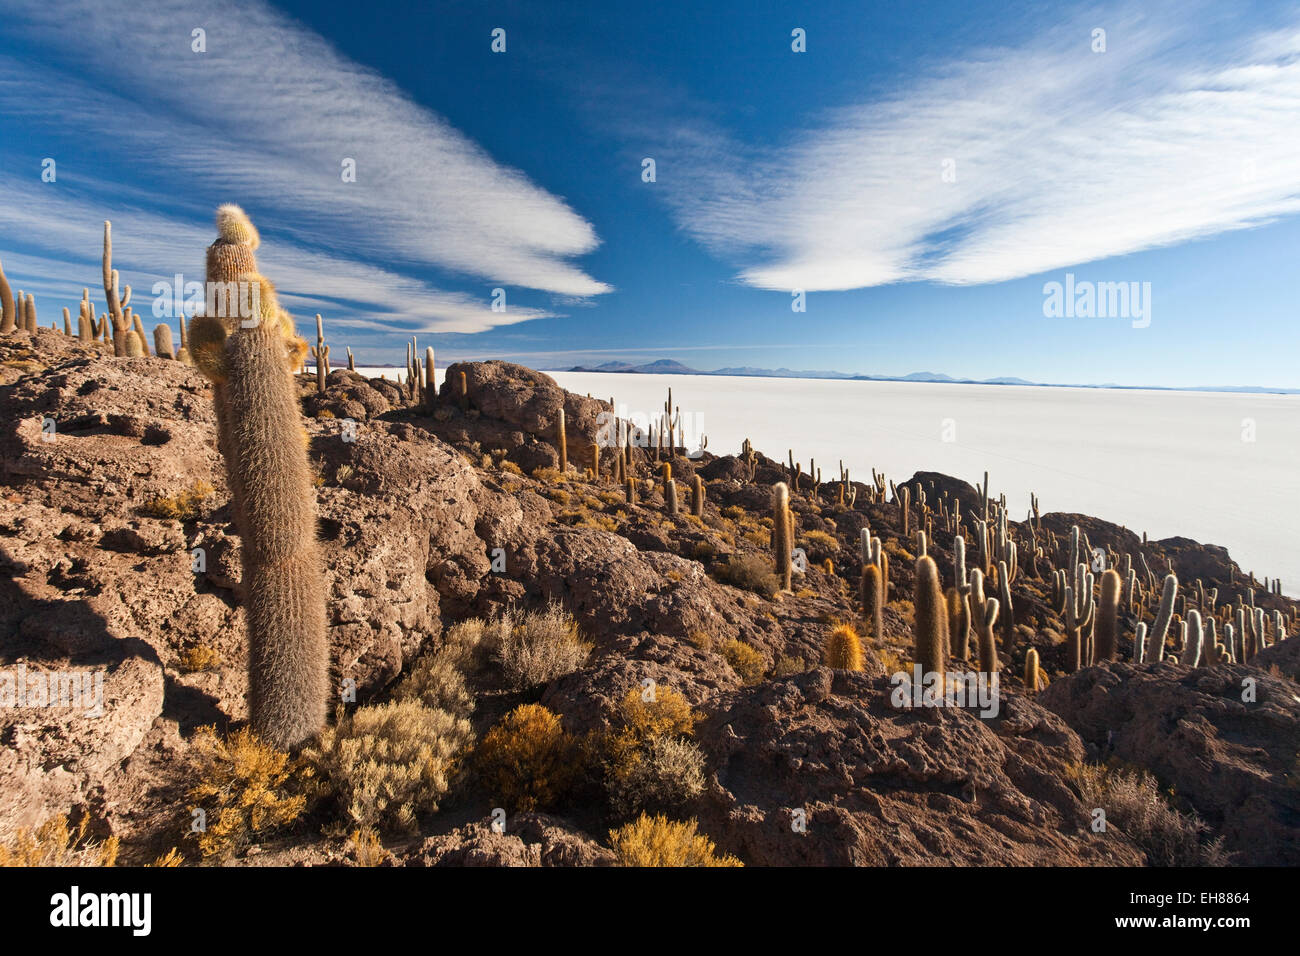 The Salar de Uyuni, a desert salt flat, seen from the Isla del Sol, covered in cactus and bushes, Sur Lipez Region, Bolivia Stock Photo